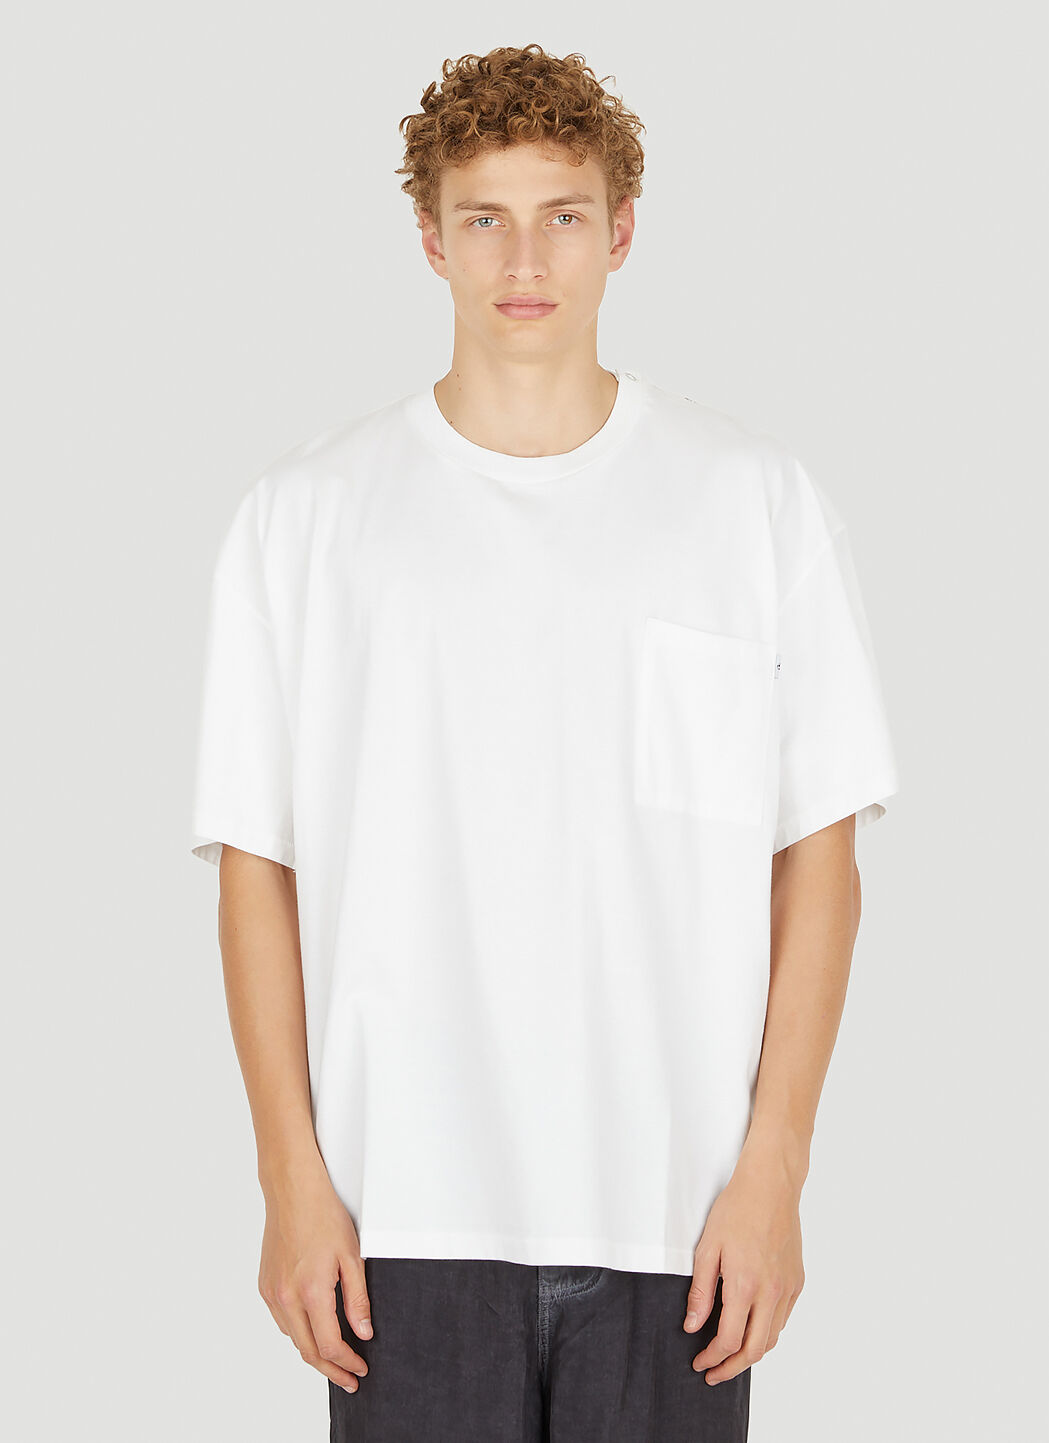 ICE & TECHNO Snap-Stud T-Shirt Grey int0154001